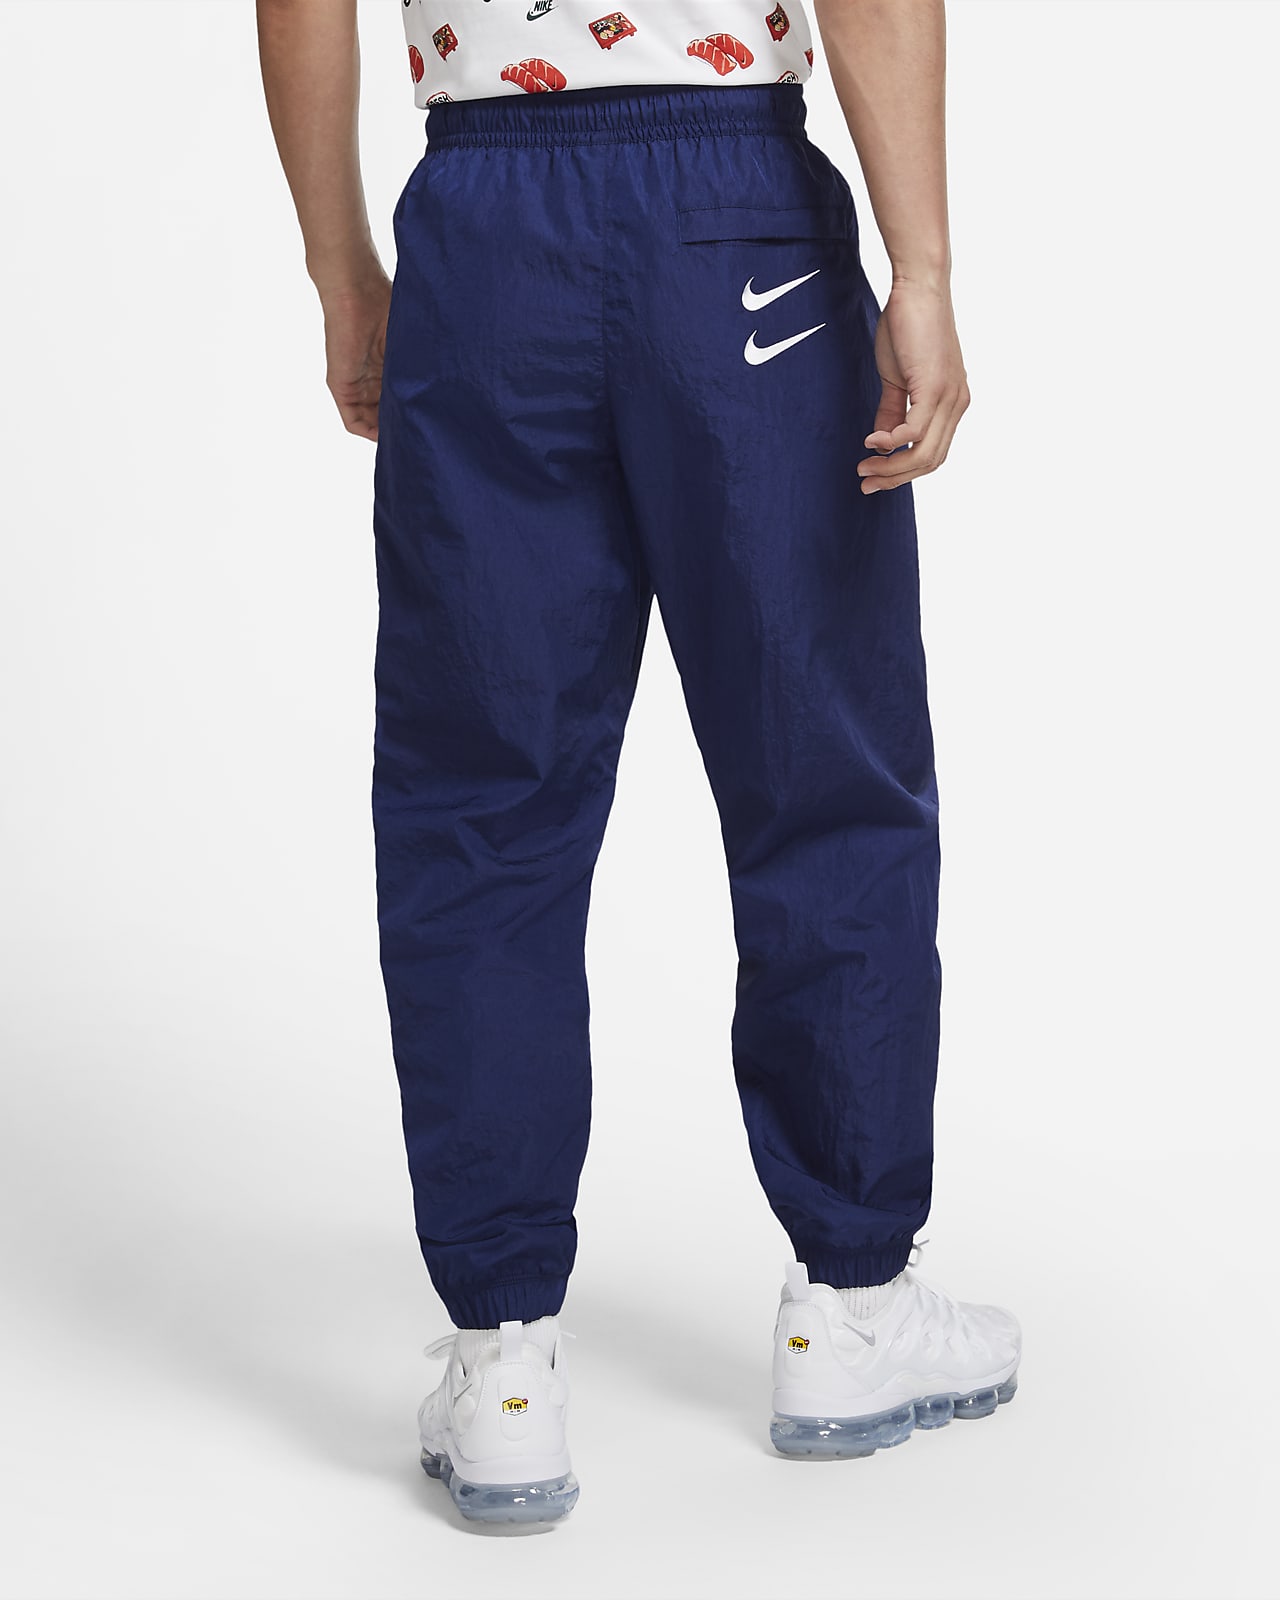 Pantalones tejidos para hombre Nike Sportswear Swoosh. Nike.com